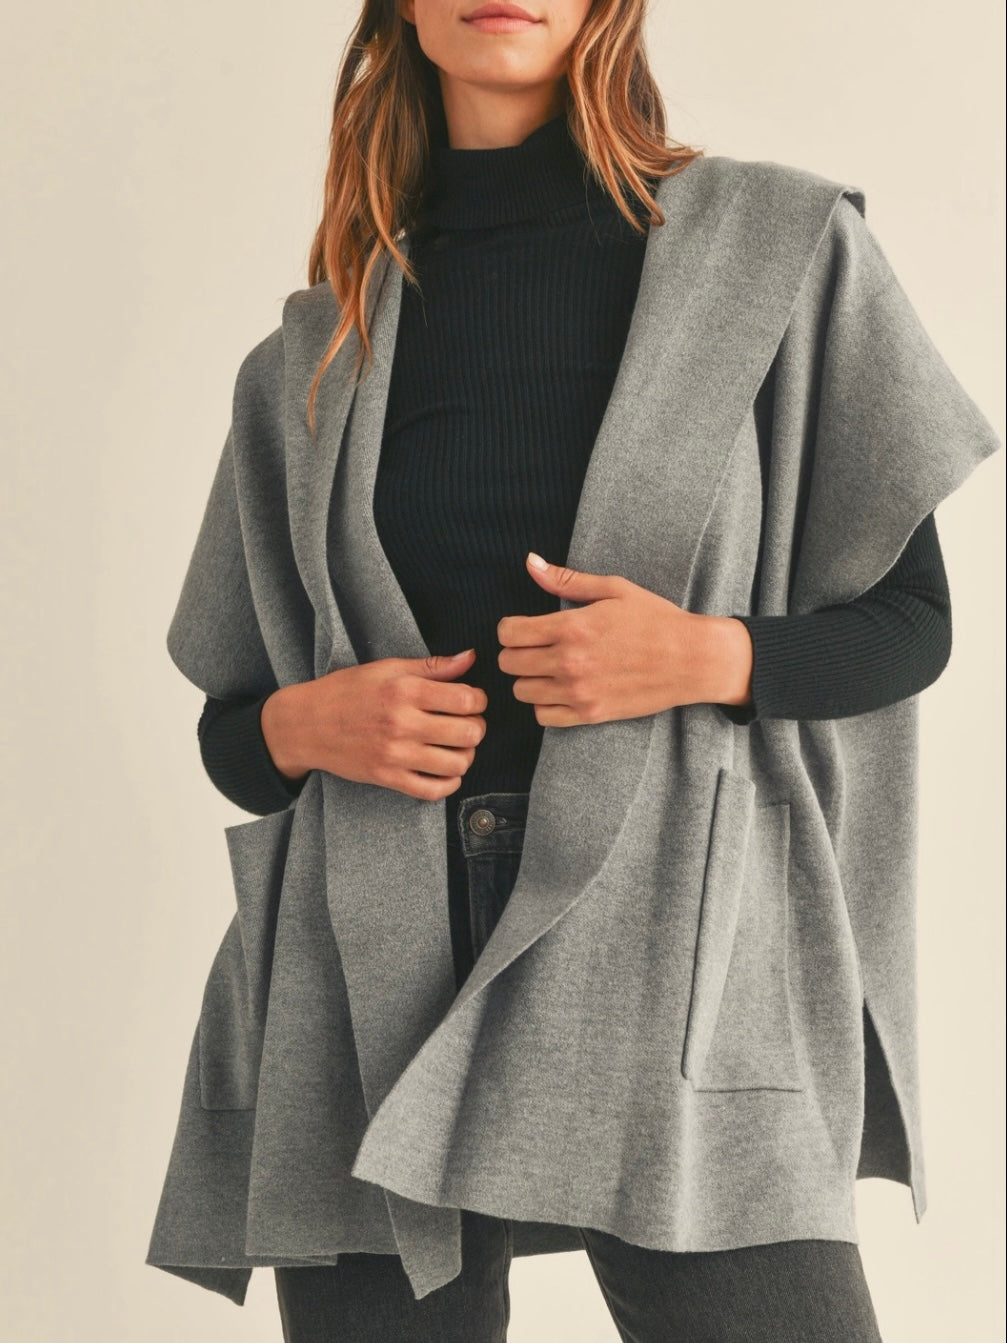 Gray oversized open cardigan sweater